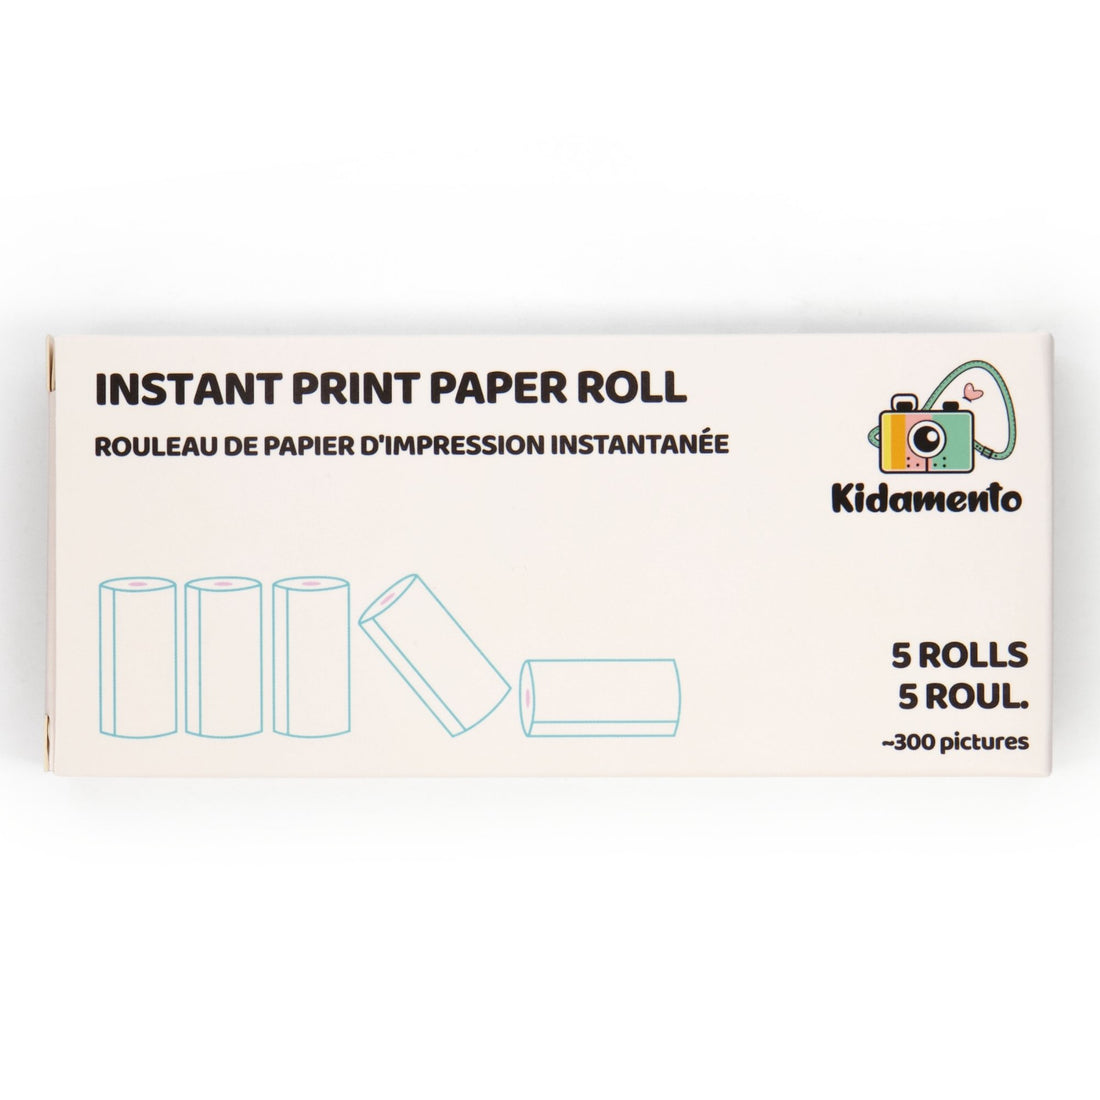 Instant print thermal paper refill set kidamento model p packaging